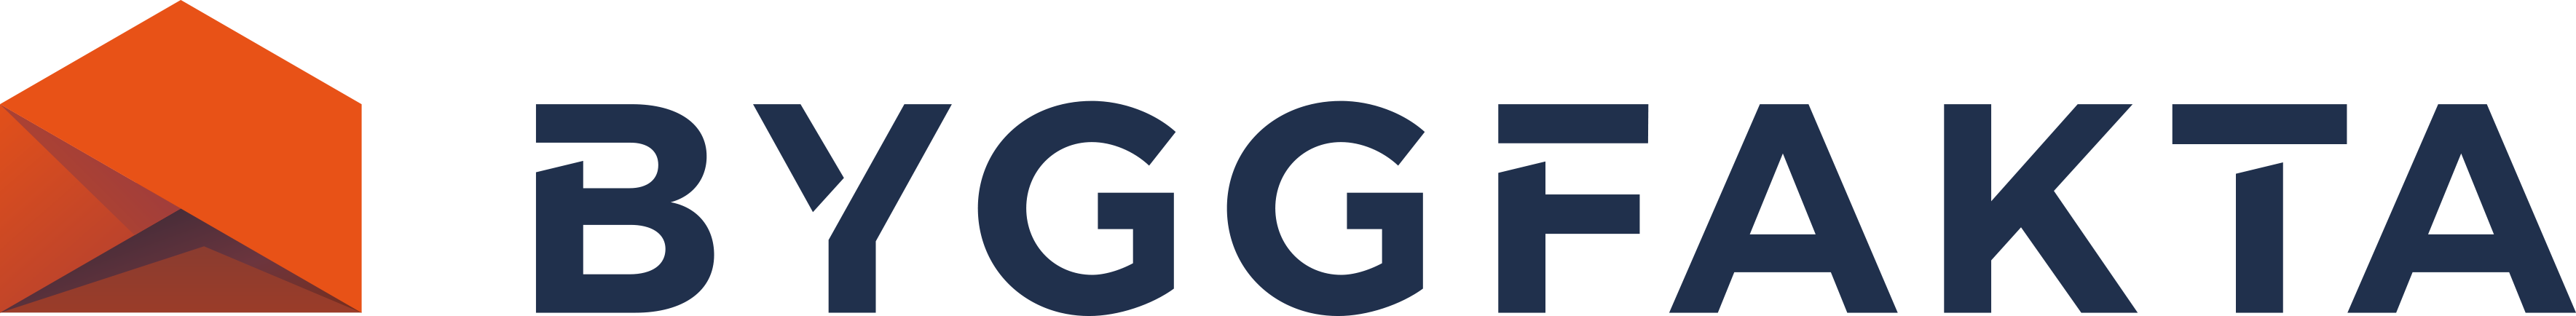 Byggfakta logo - RGB-2